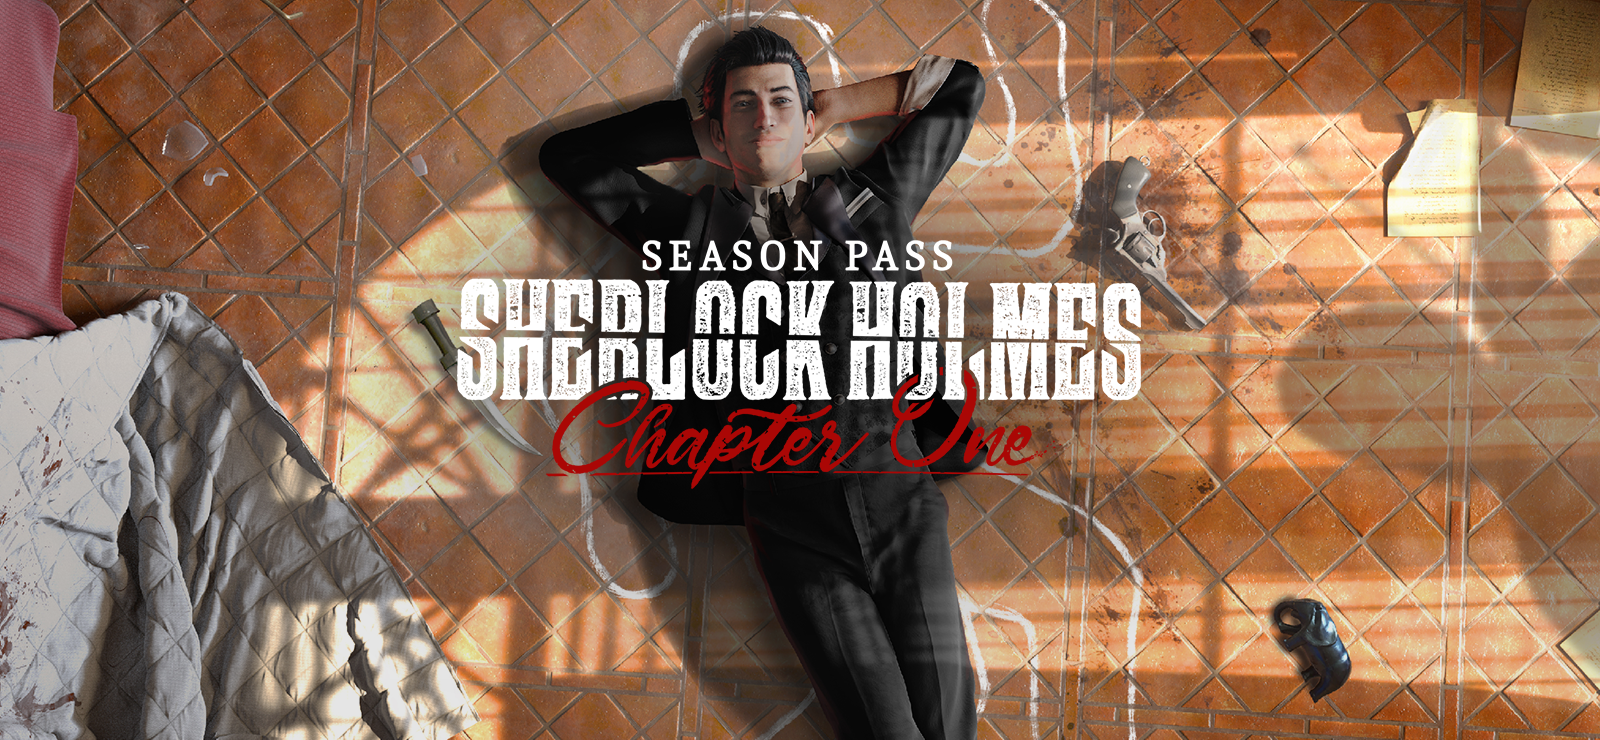 Sherlock Holmes Chapter One Season Pass